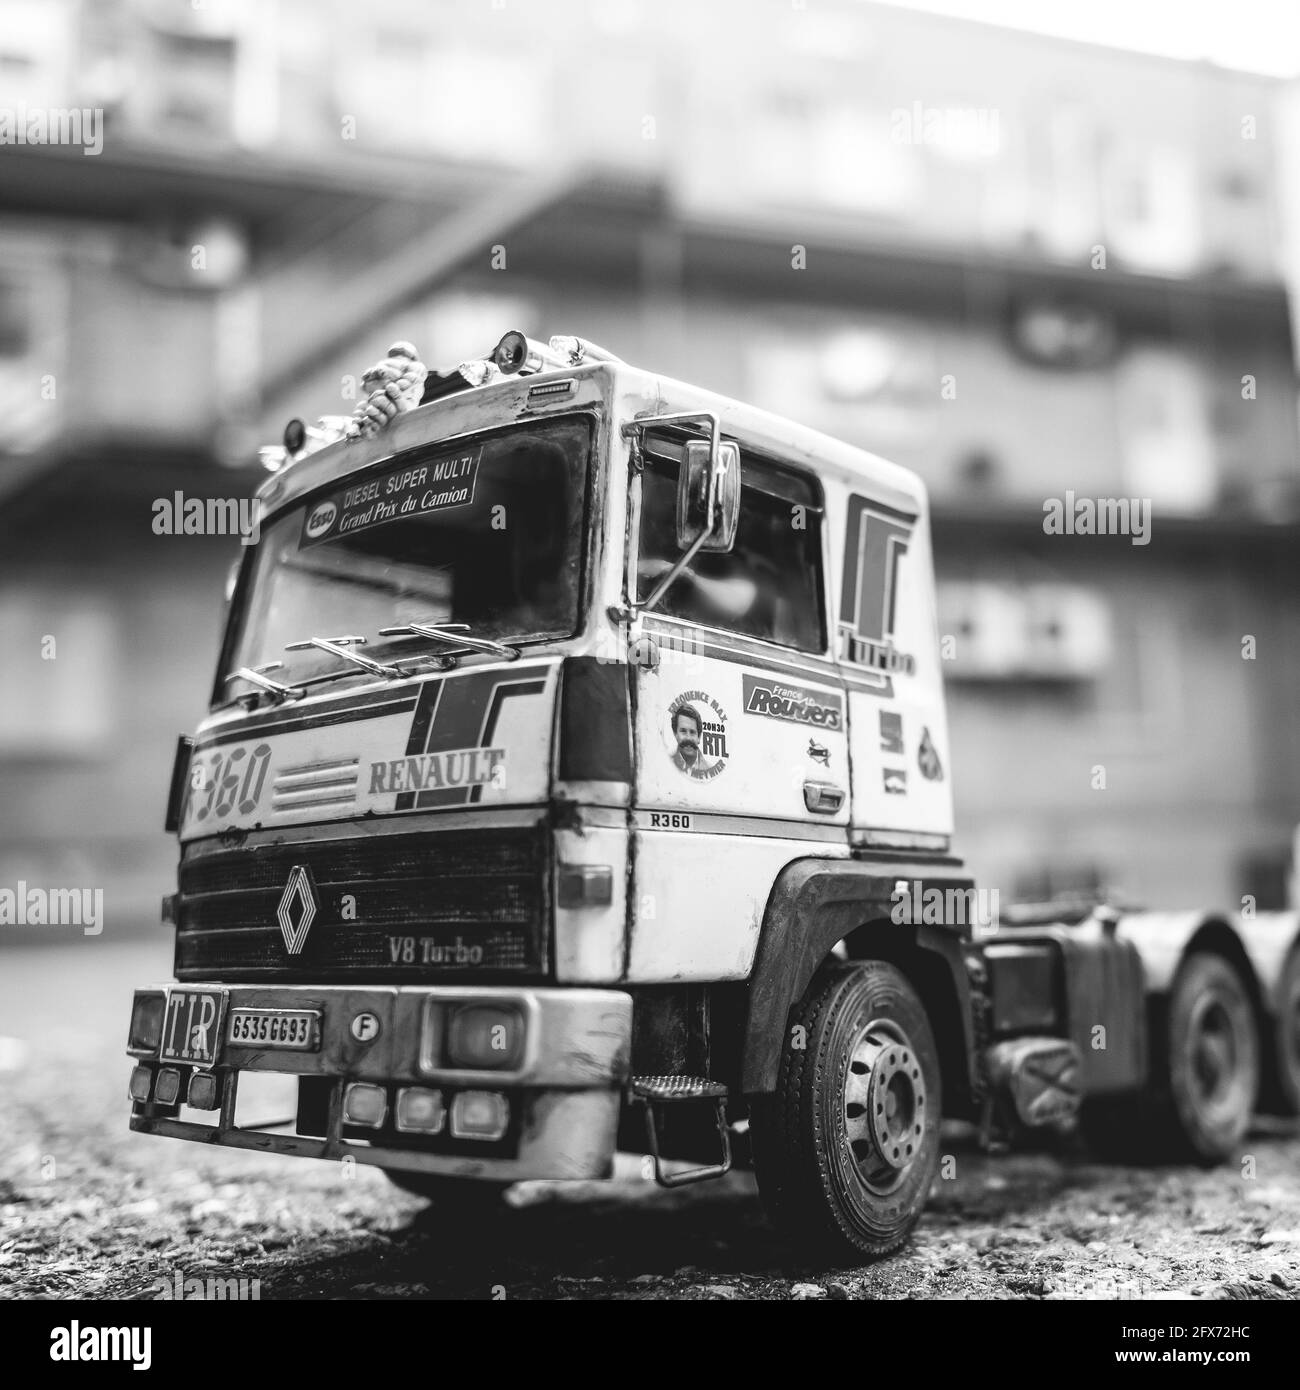 italeri truck 1/24 Renault R360 Turbo with heavy weathering realistic Stock Photo